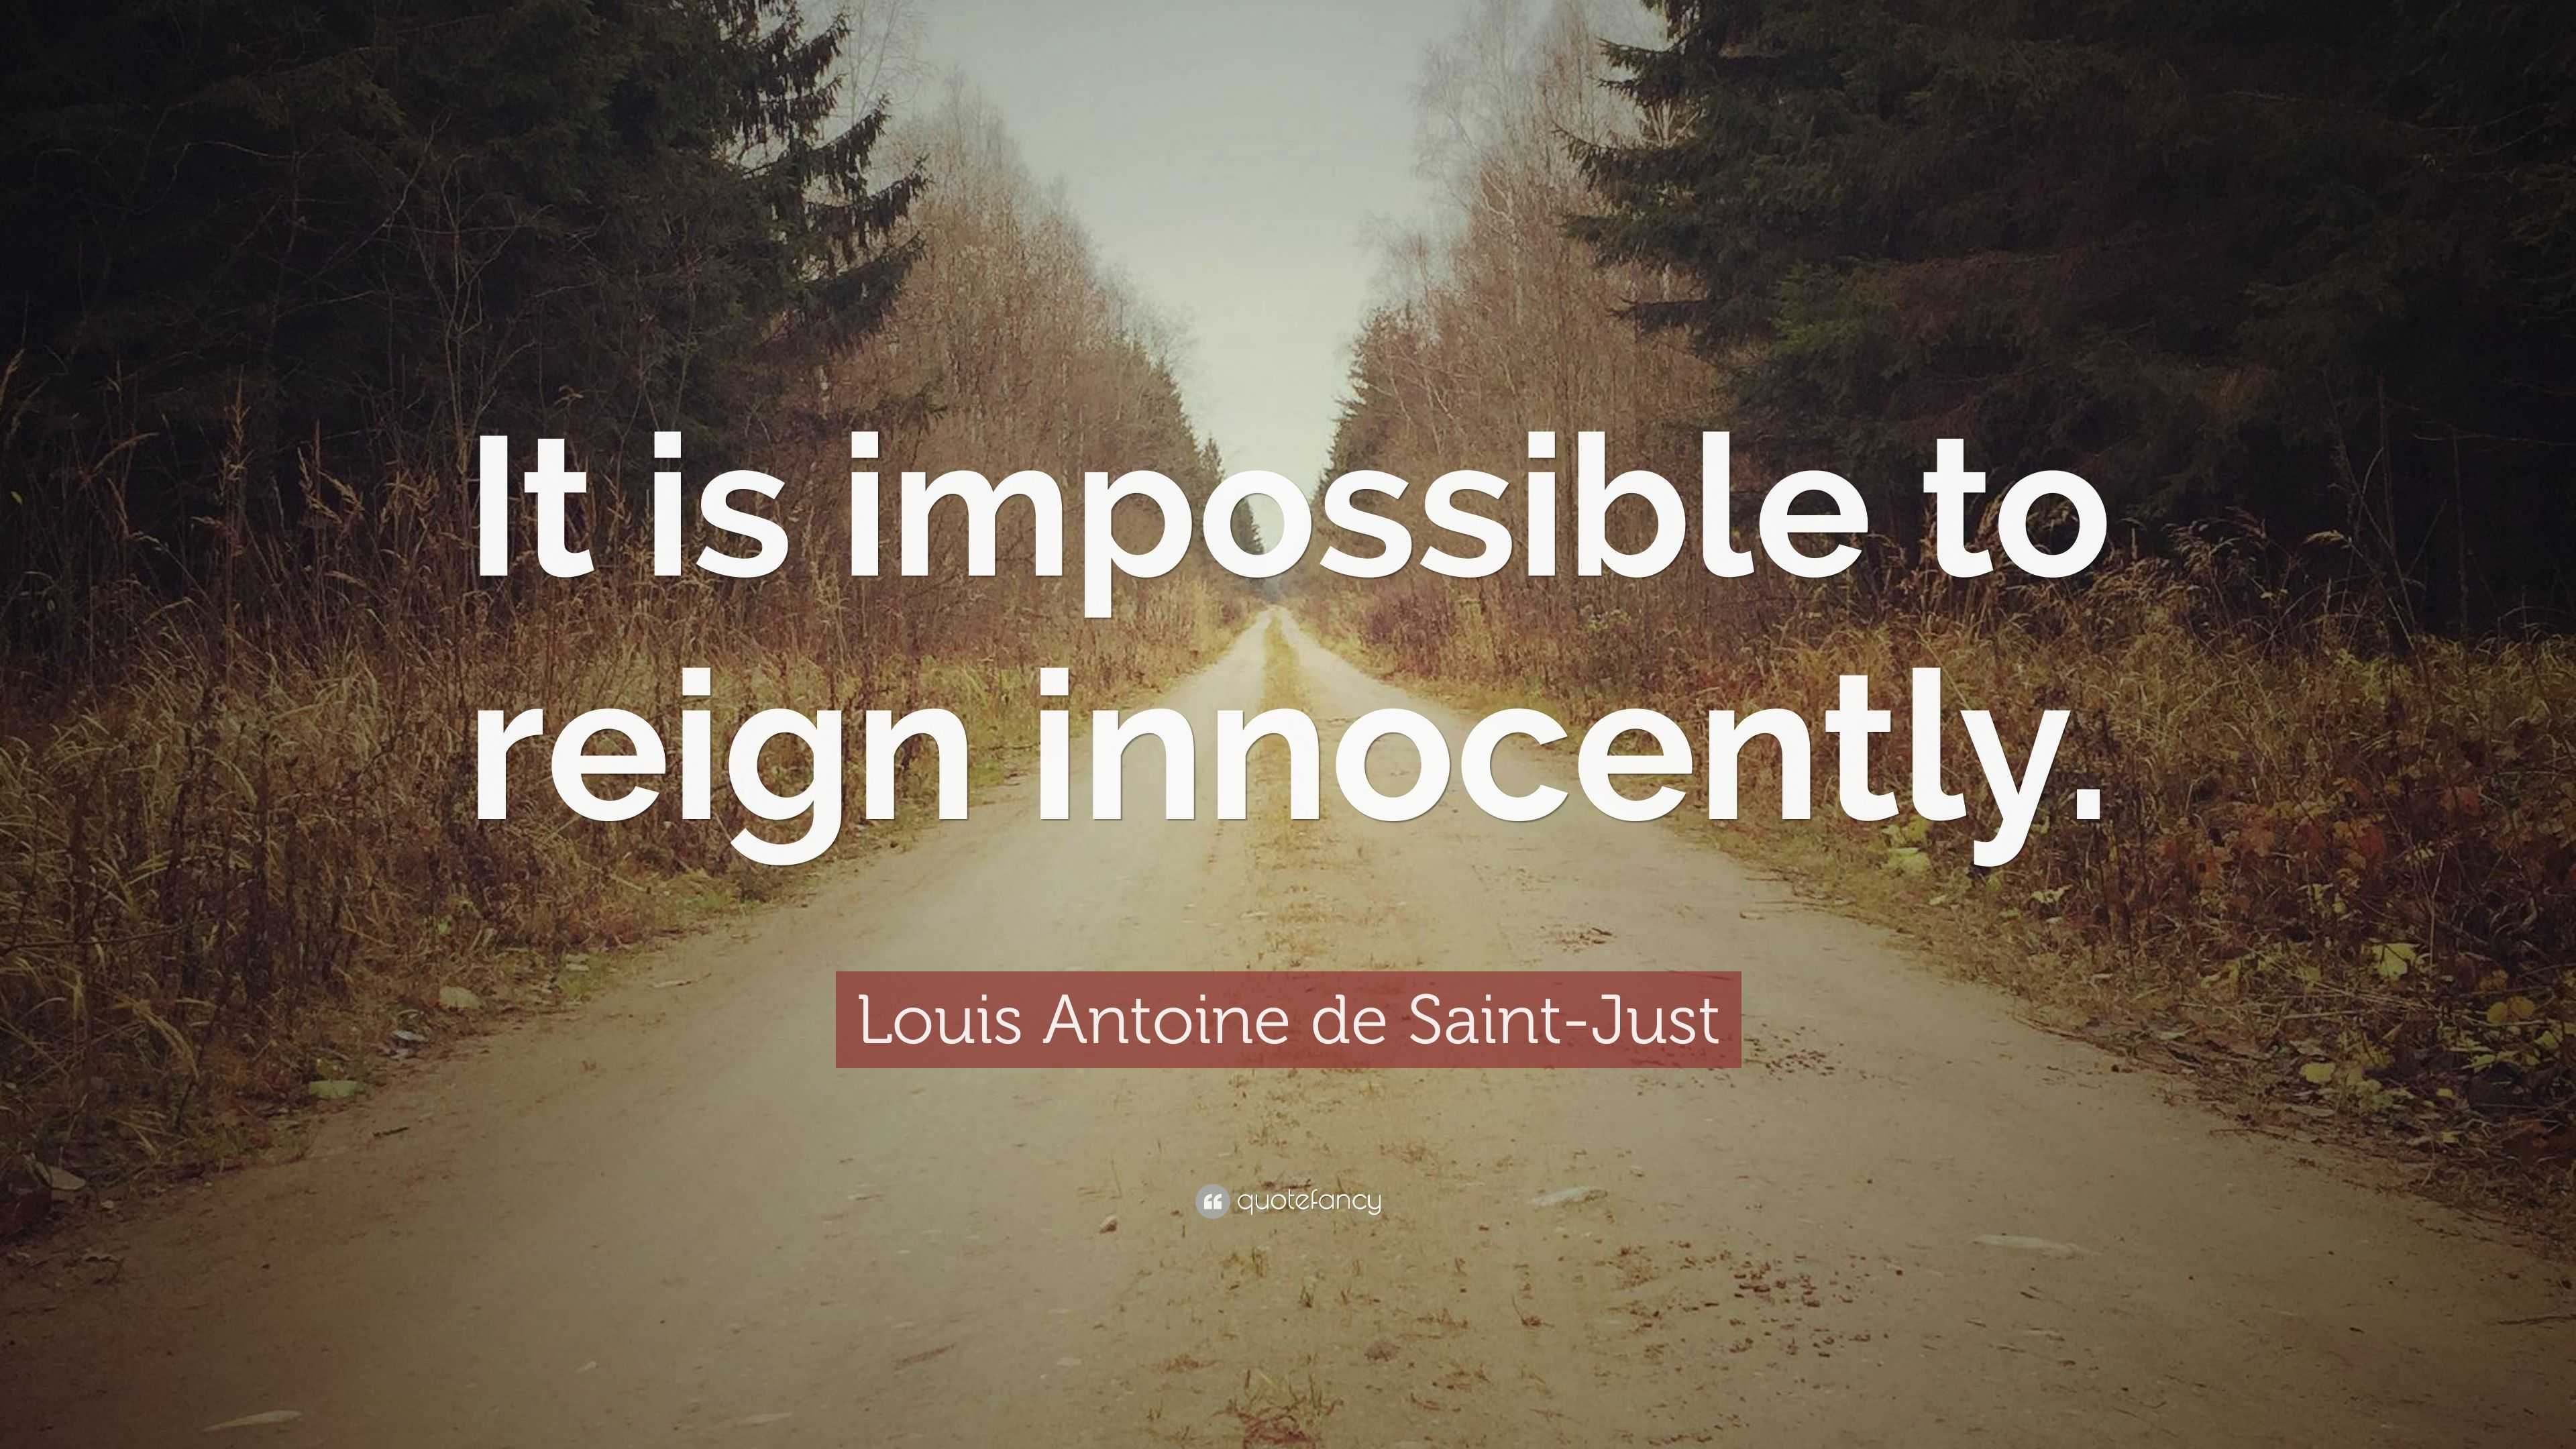 Não se pode reinar inocentemente - Louis Antoine de Saint-Just - Frases